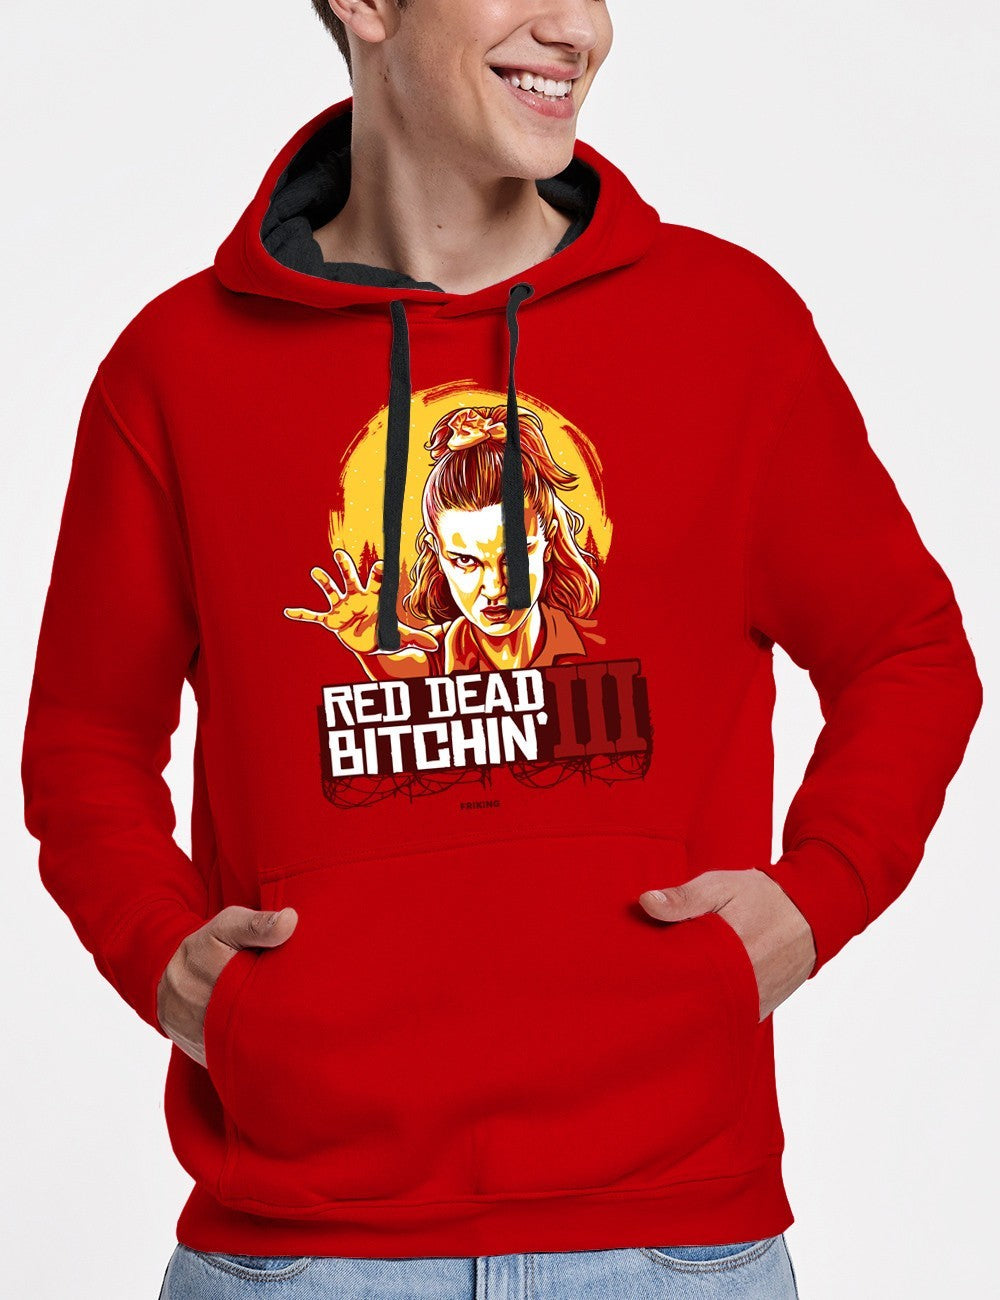  Red Dead Bitchin' 3 